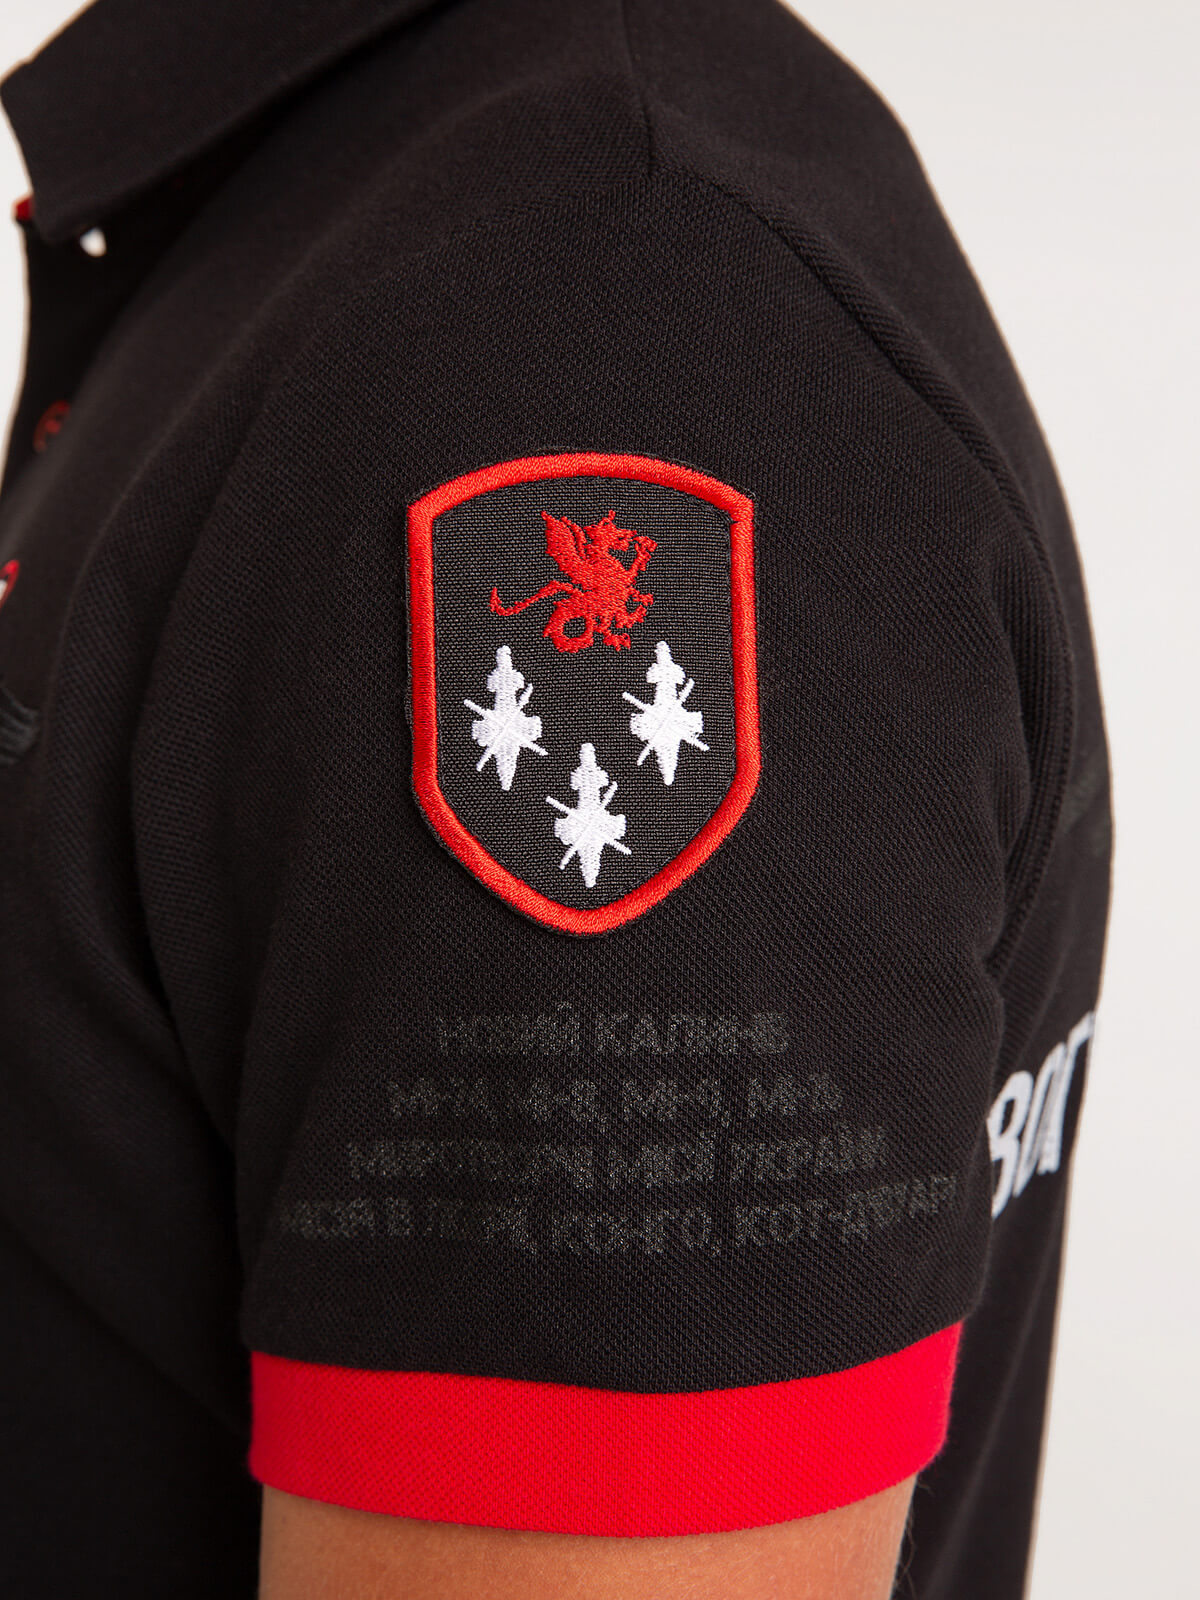 Women's Polo Shirt 12 Brigade (The Dragon Slayer). Color black. 
Height of the model: 163 cm.